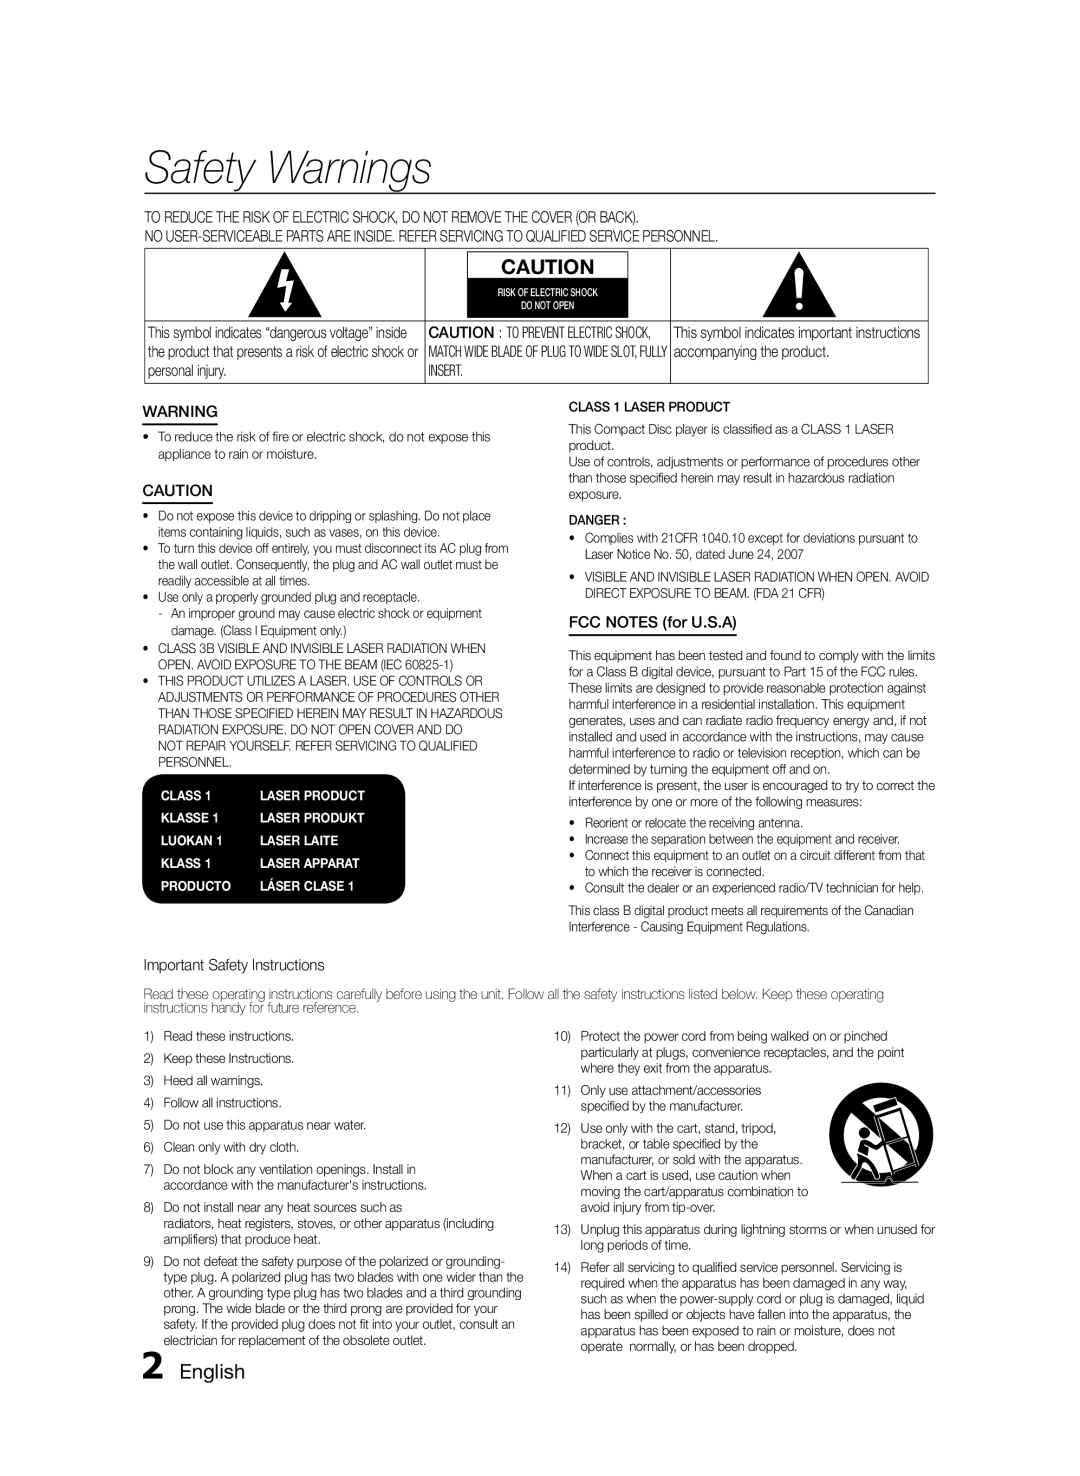 Samsung MXFS9000ZA Safety Warnings, English, Class, Laser Product, Klasse, Laser Produkt, Luokan, Laser Laite, Producto 